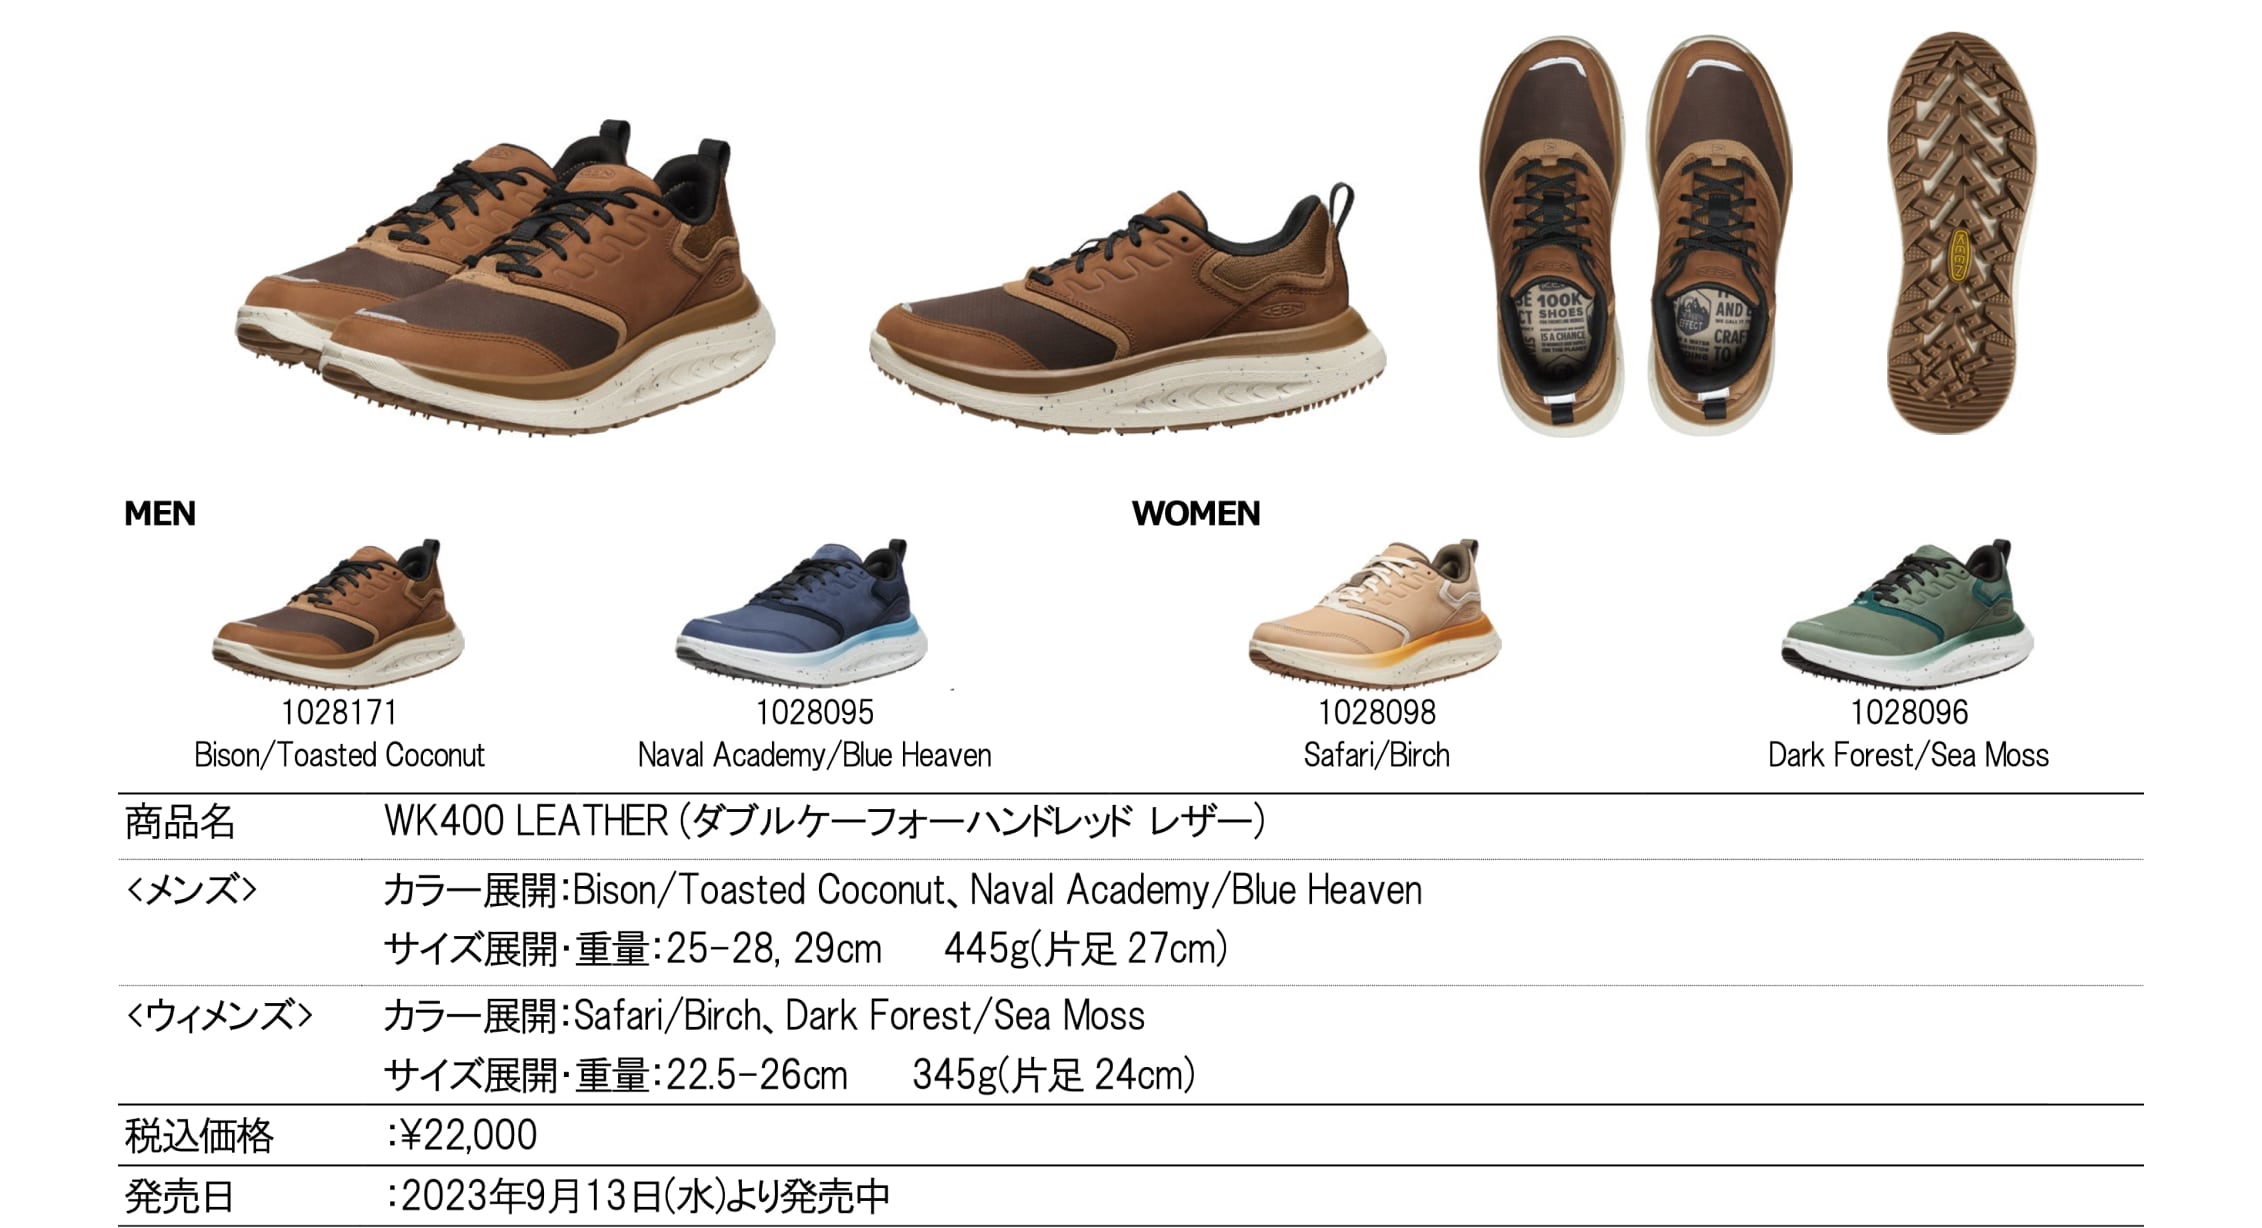 wk400 leather 商品詳細